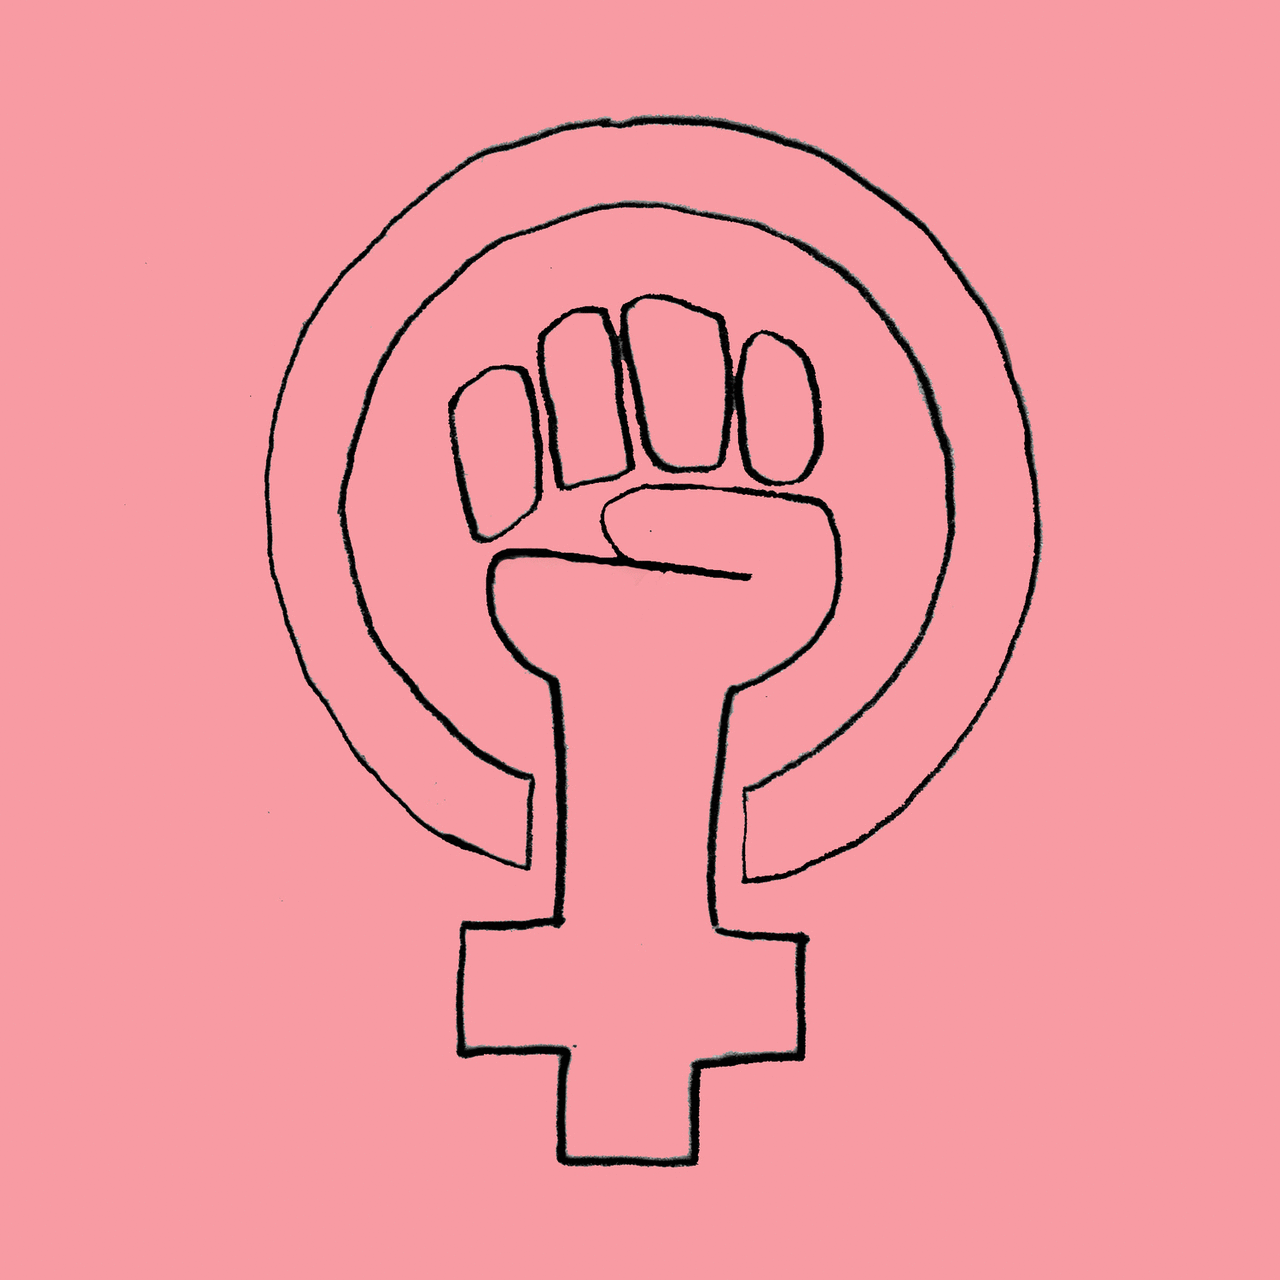 Феминизм. Значок феминизма. Флаг феминисток. Герб феминисток. Флаг феминизма